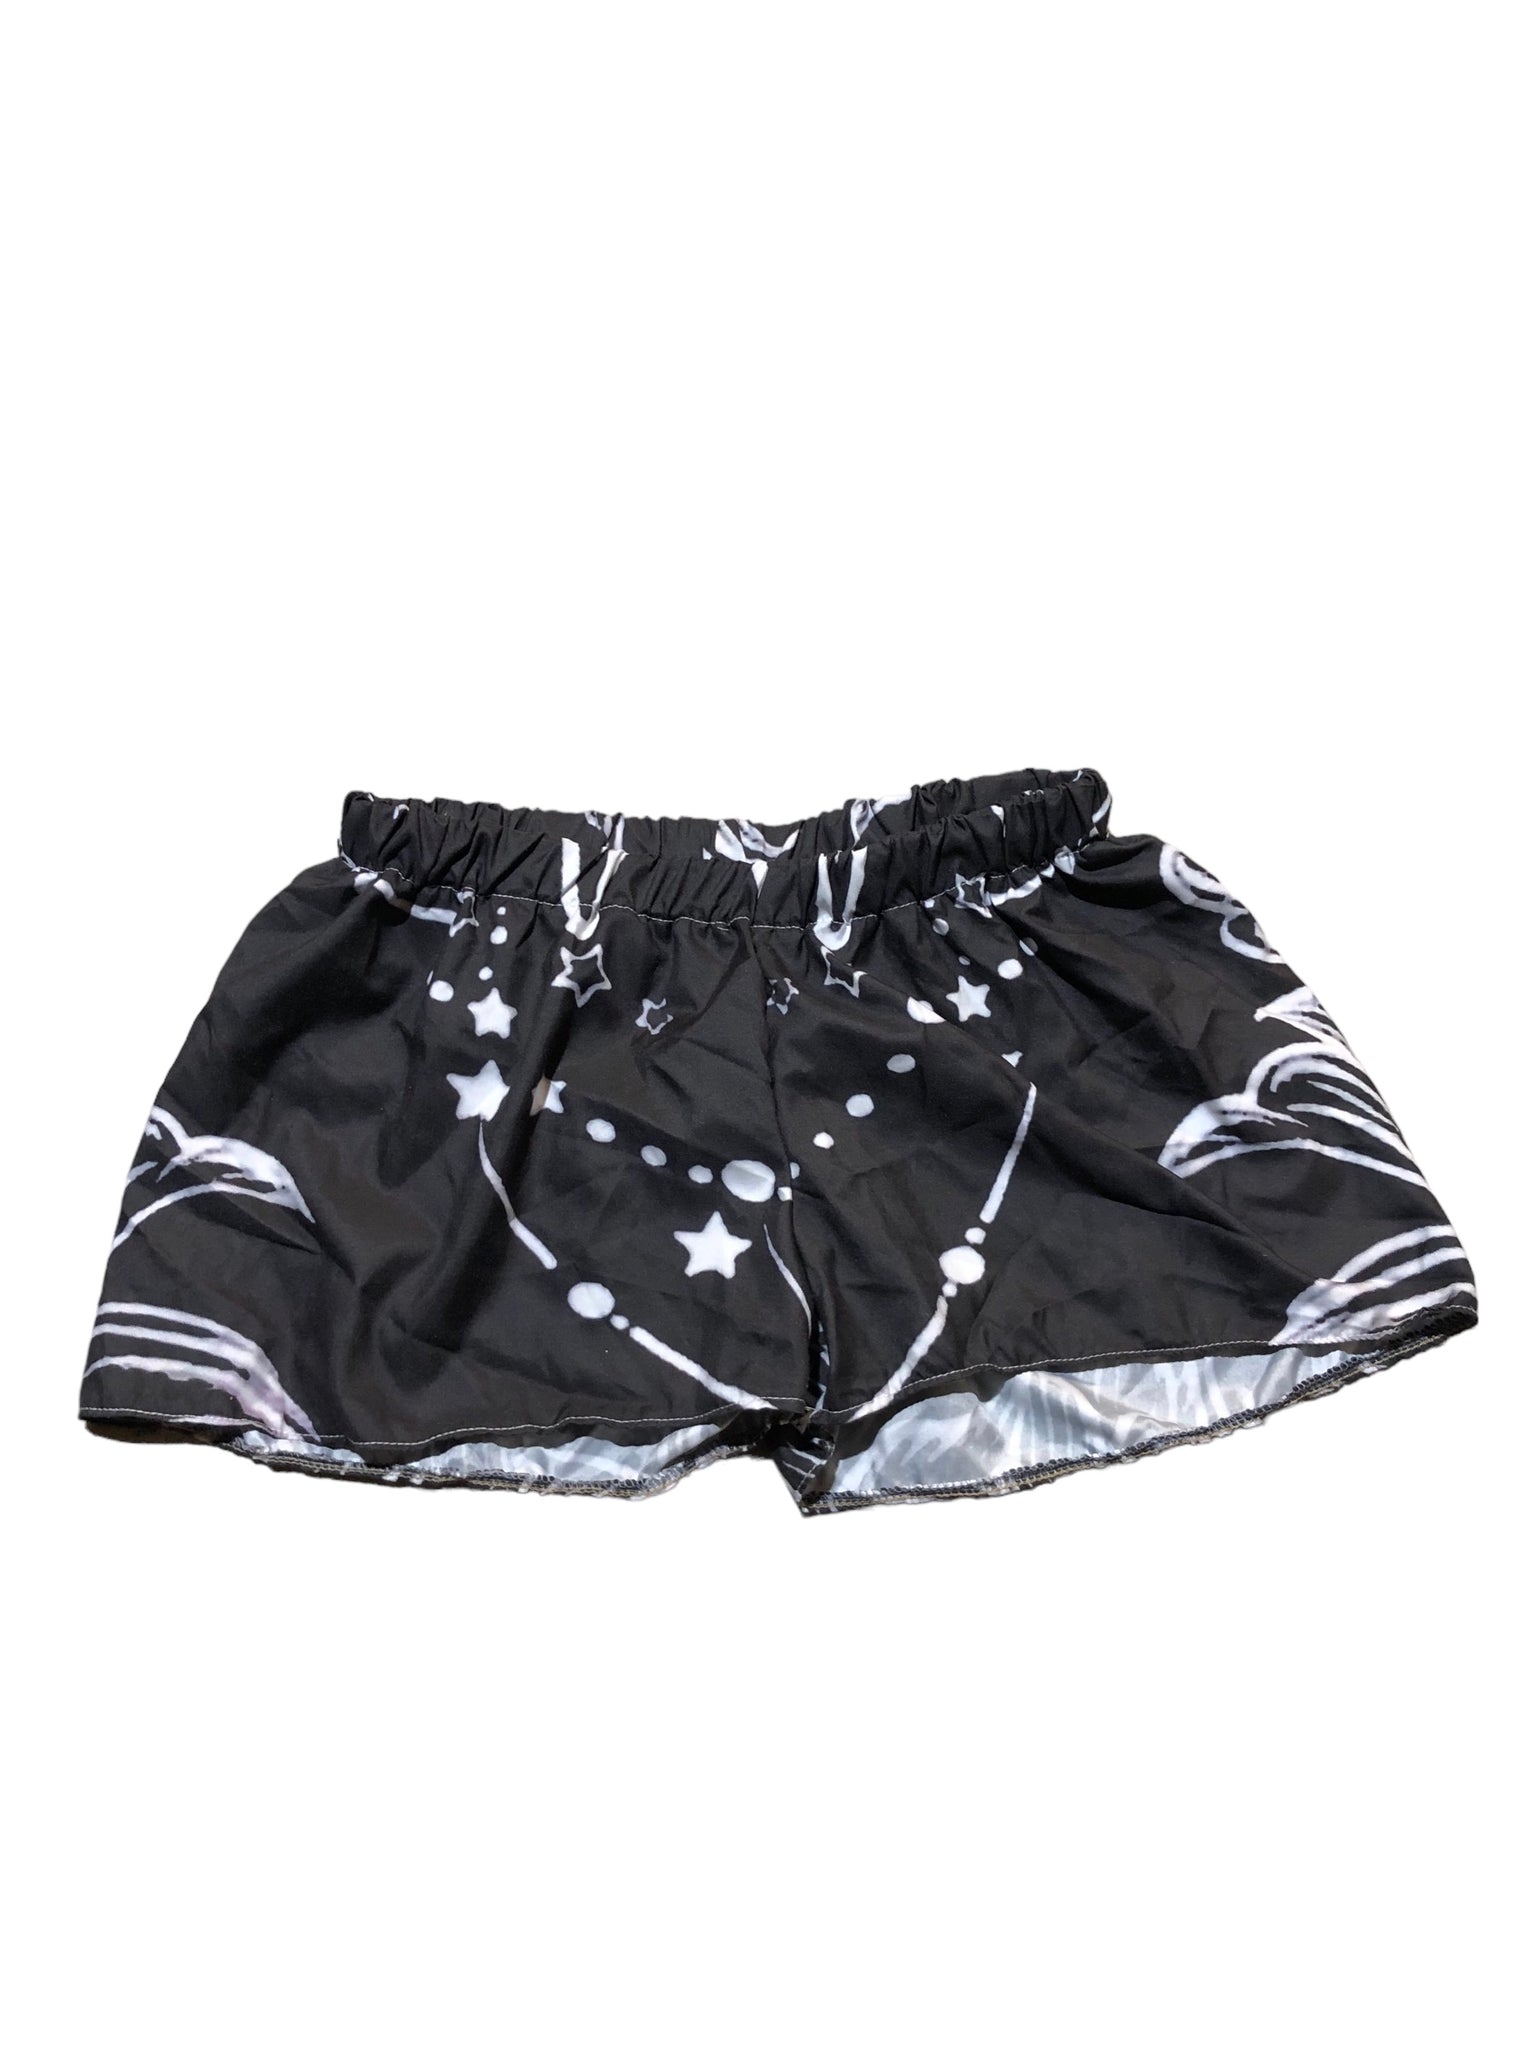 Custom black and white print Shorts by Blim